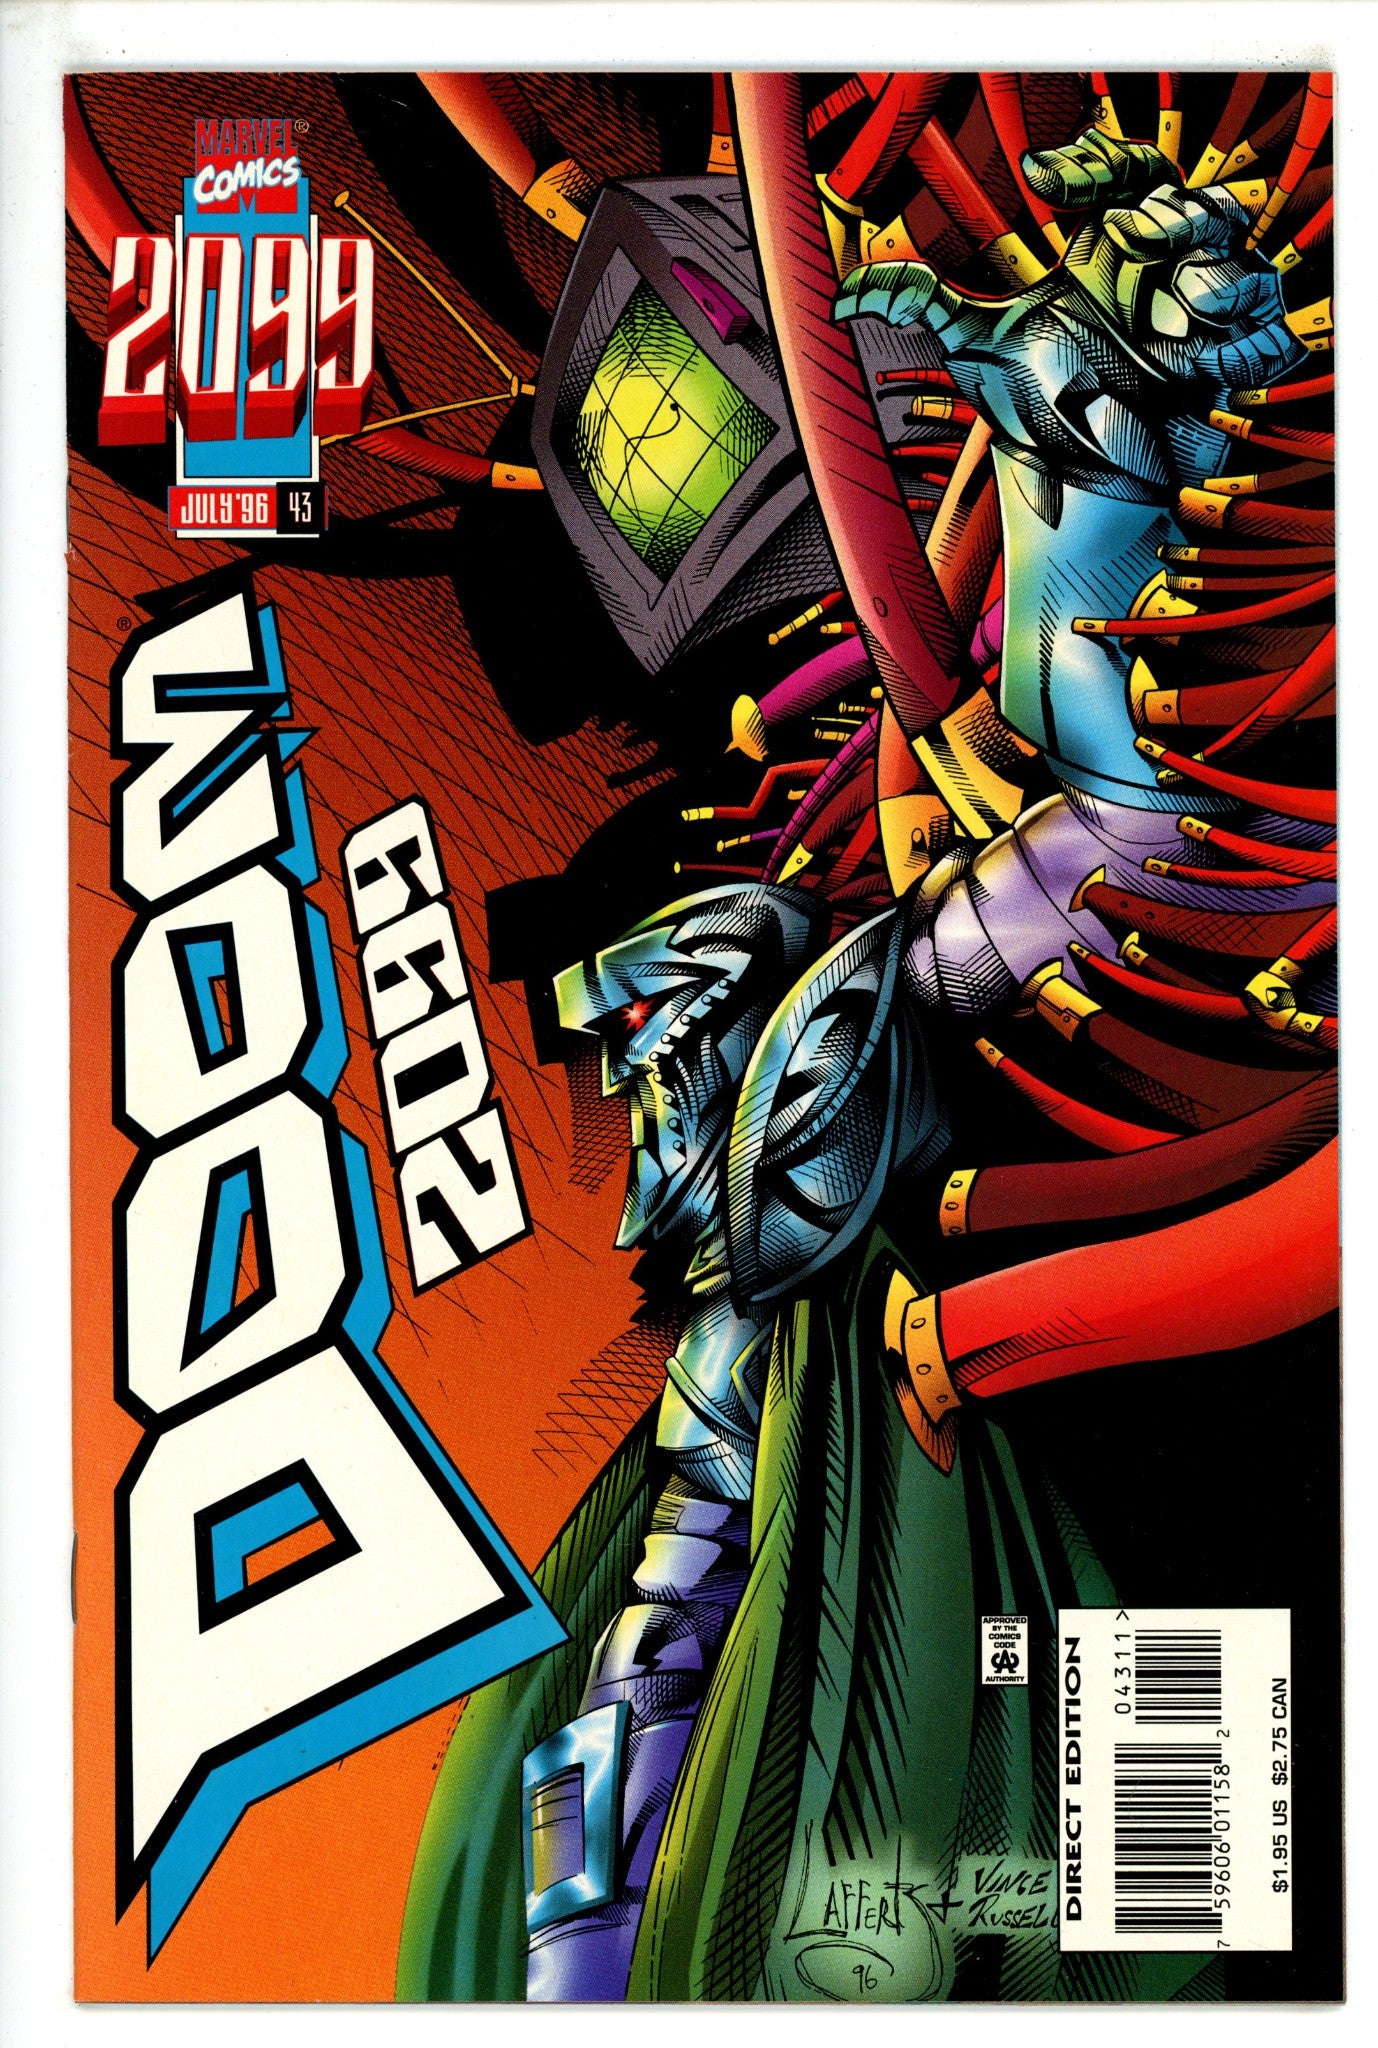 Doom 2099 Vol 1 43 NM- (1996)